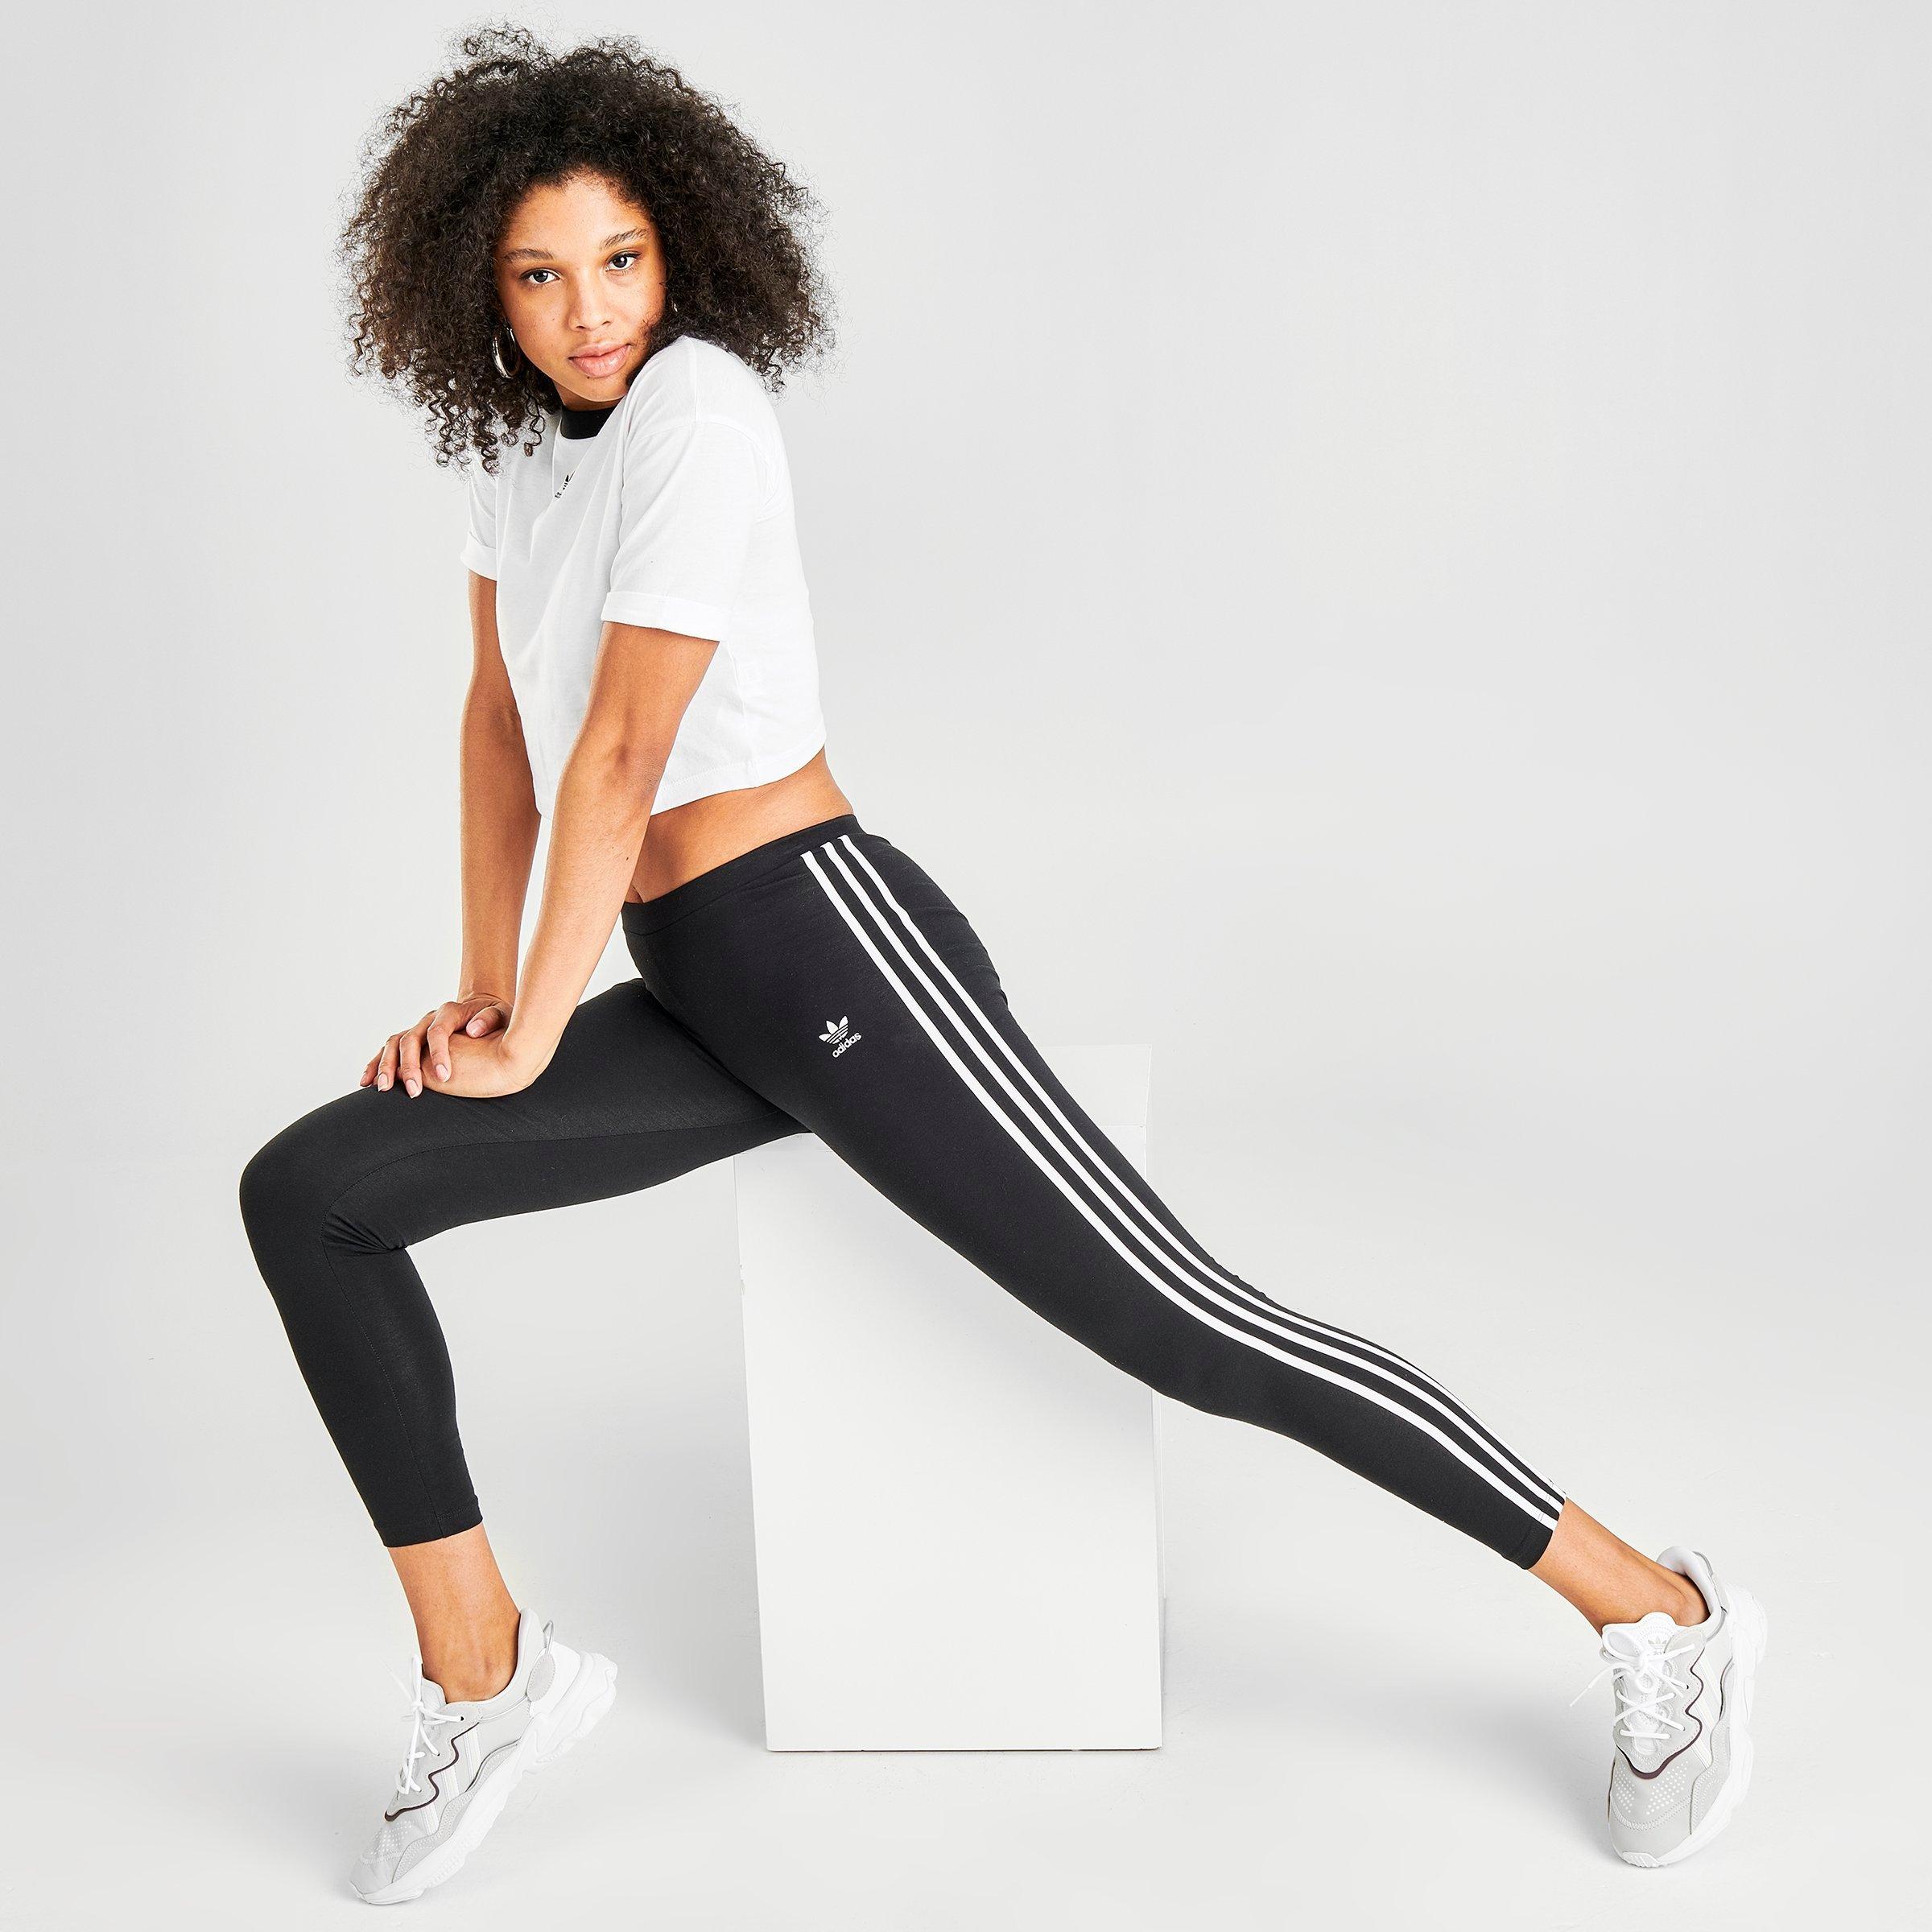 adidas women's three stripe leggings